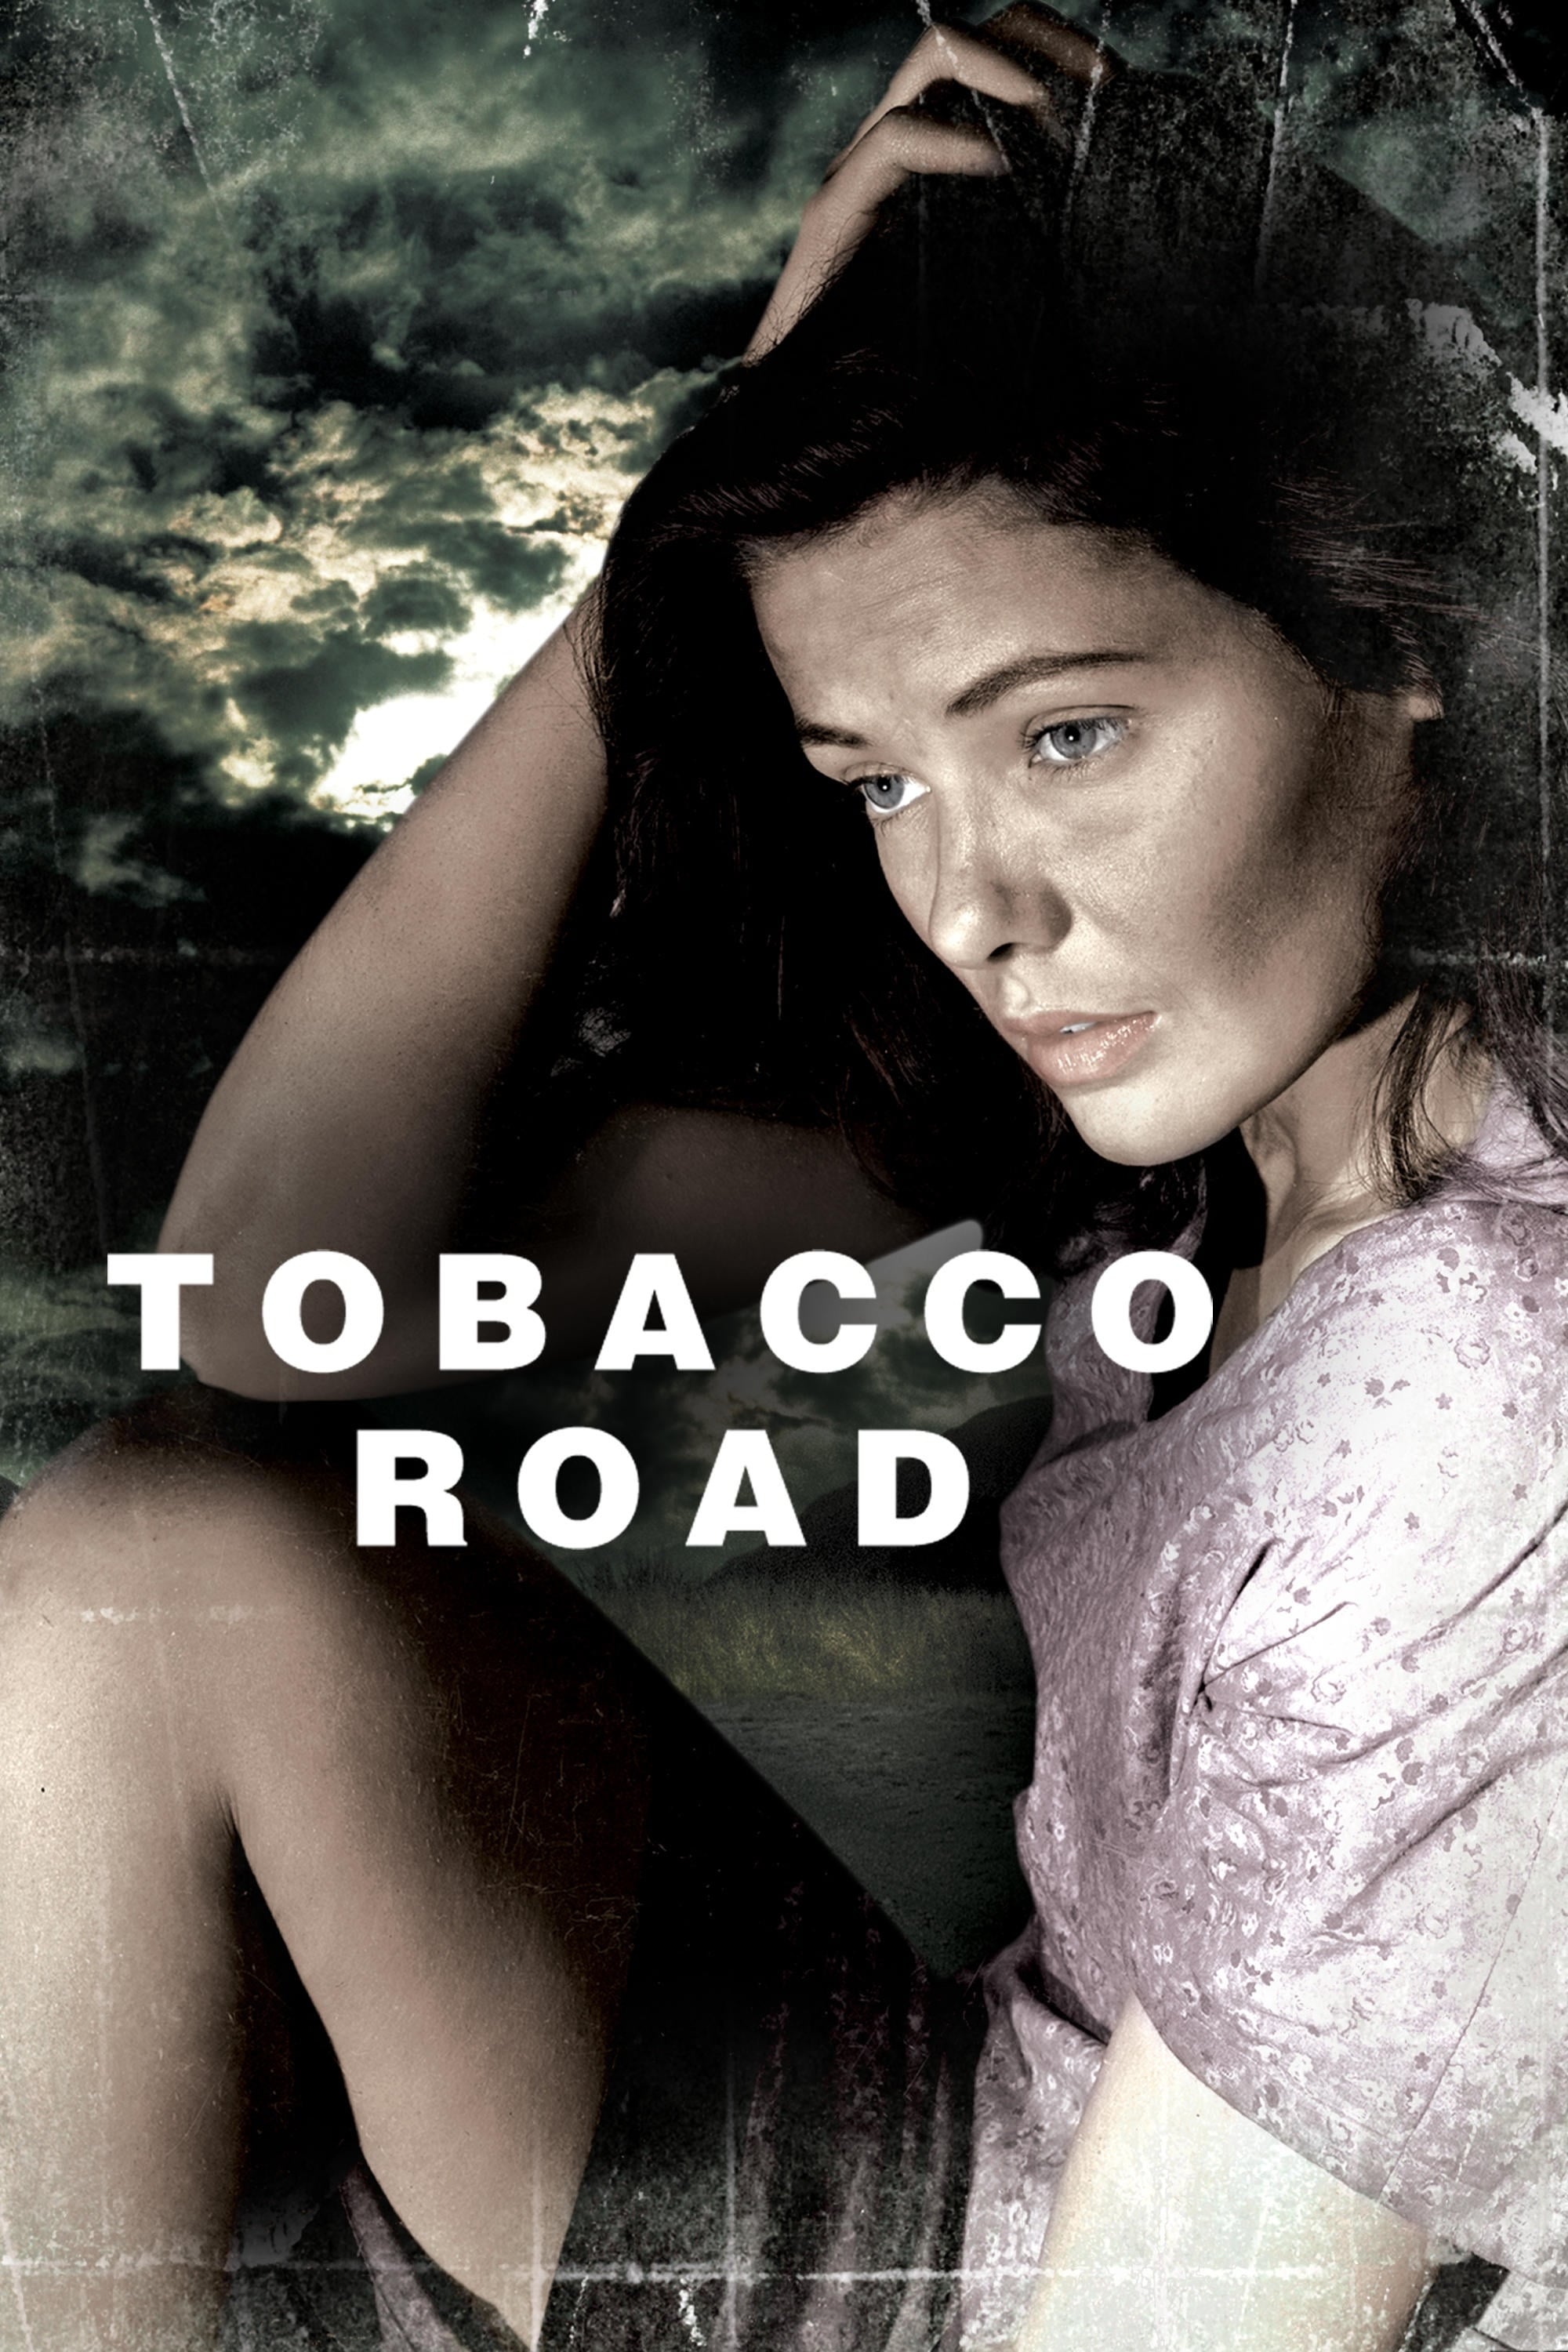 Tobacco Road (1941)